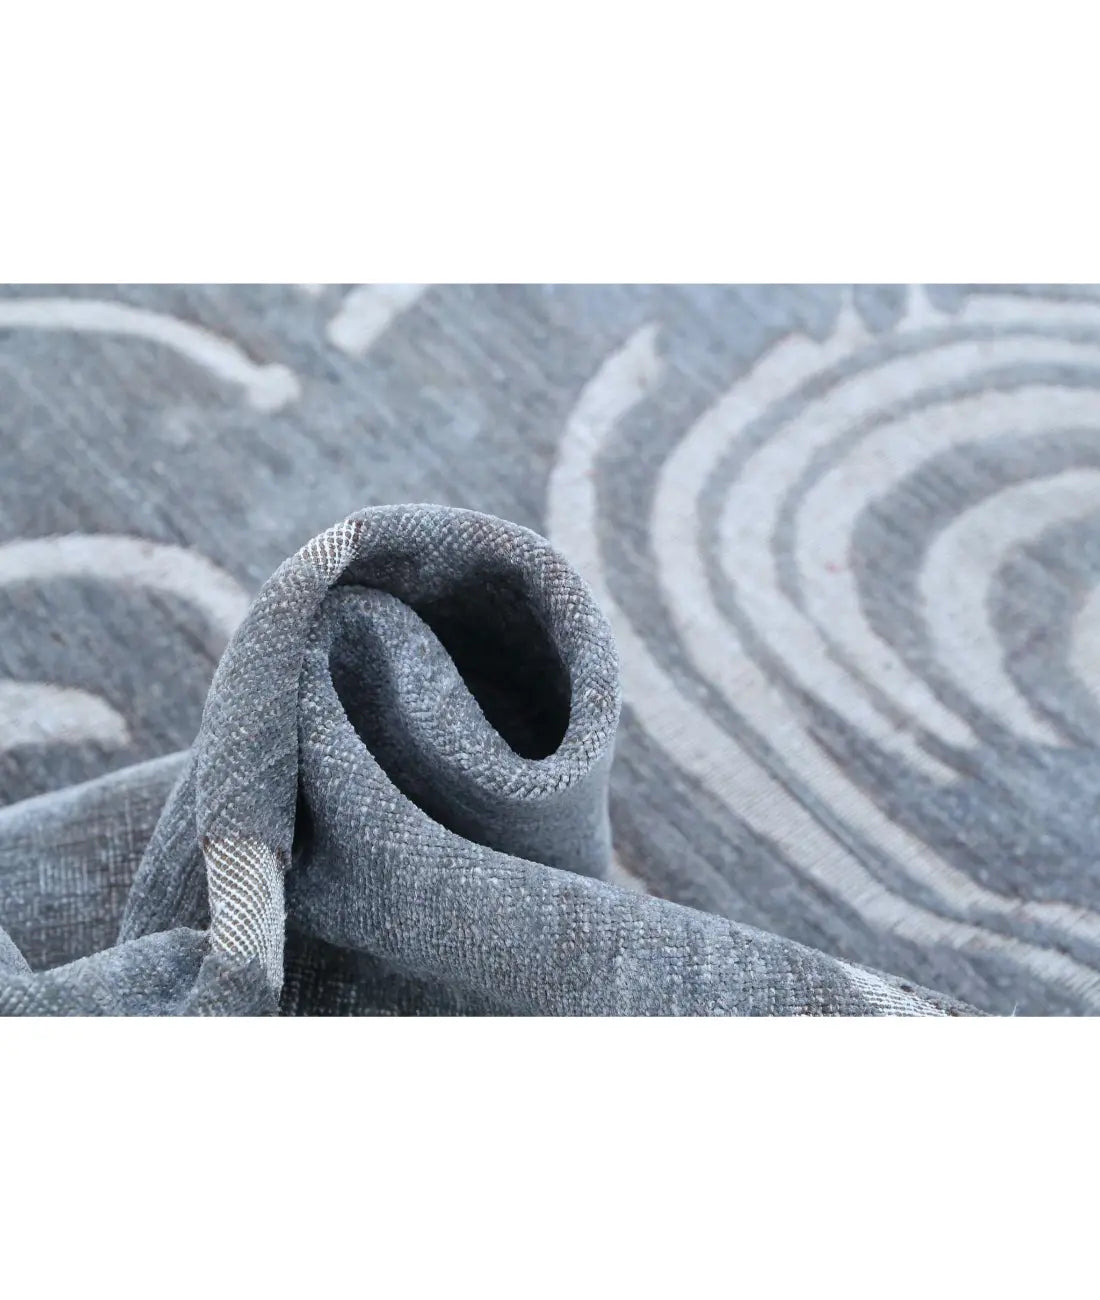 Hand Knotted Onyx Wool Rug - 6'1'' x 16'0'' - Arteverk Rugs Area rug